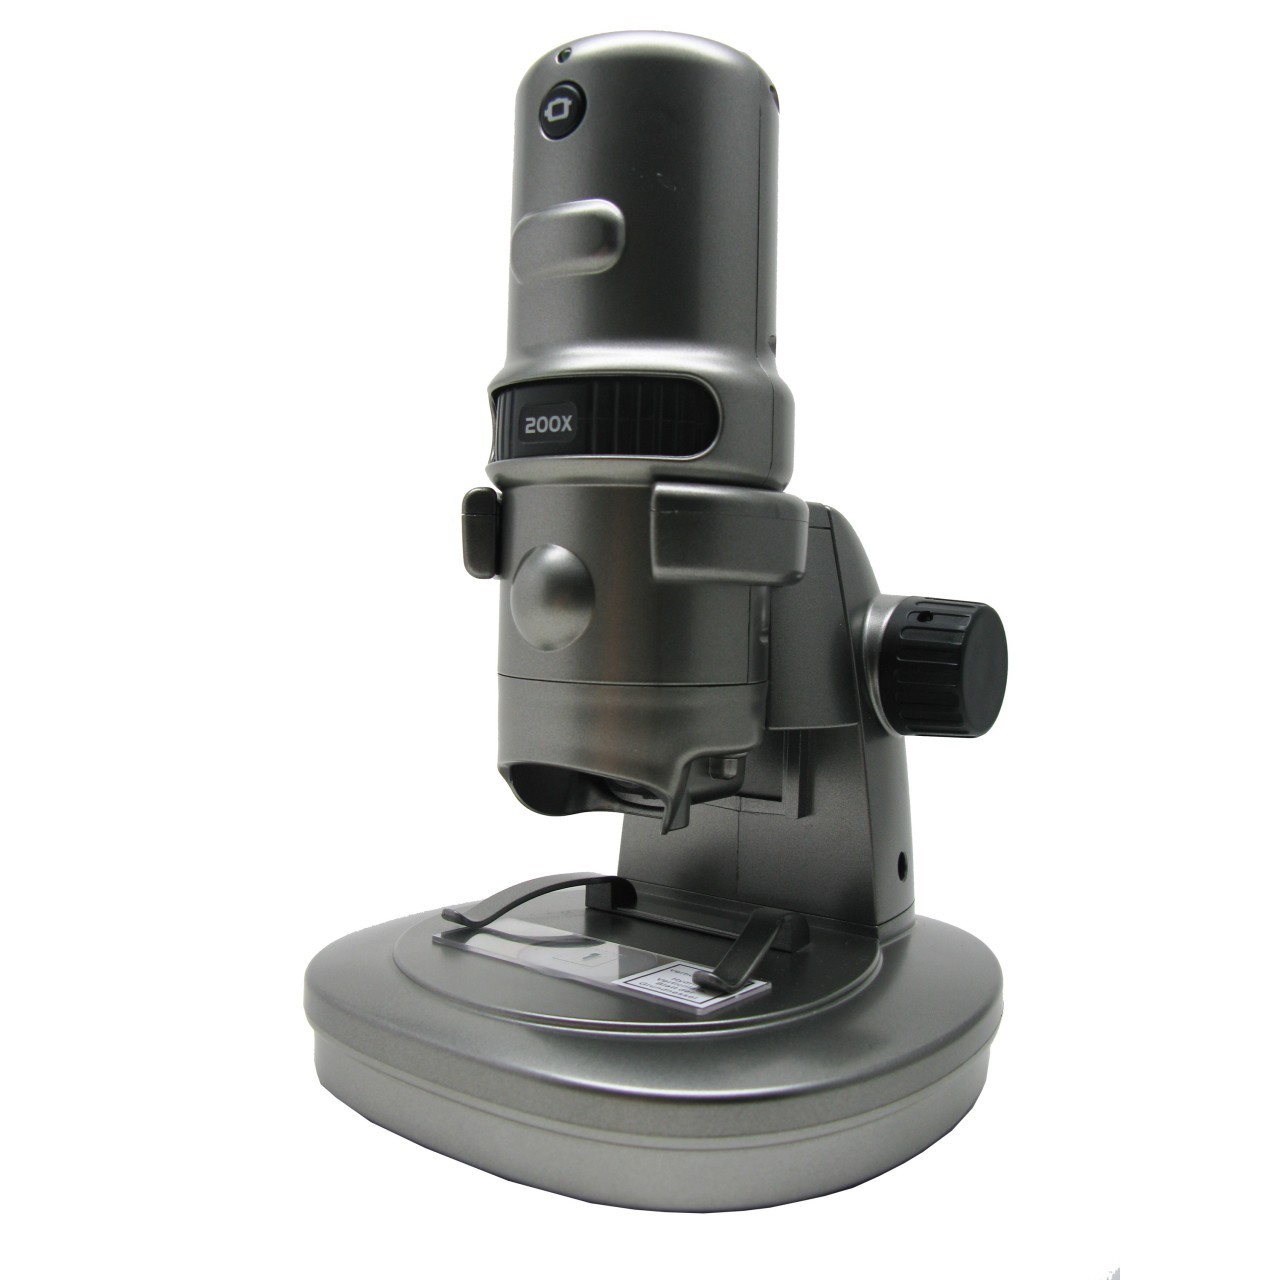 digital blue qx5 microscope manual